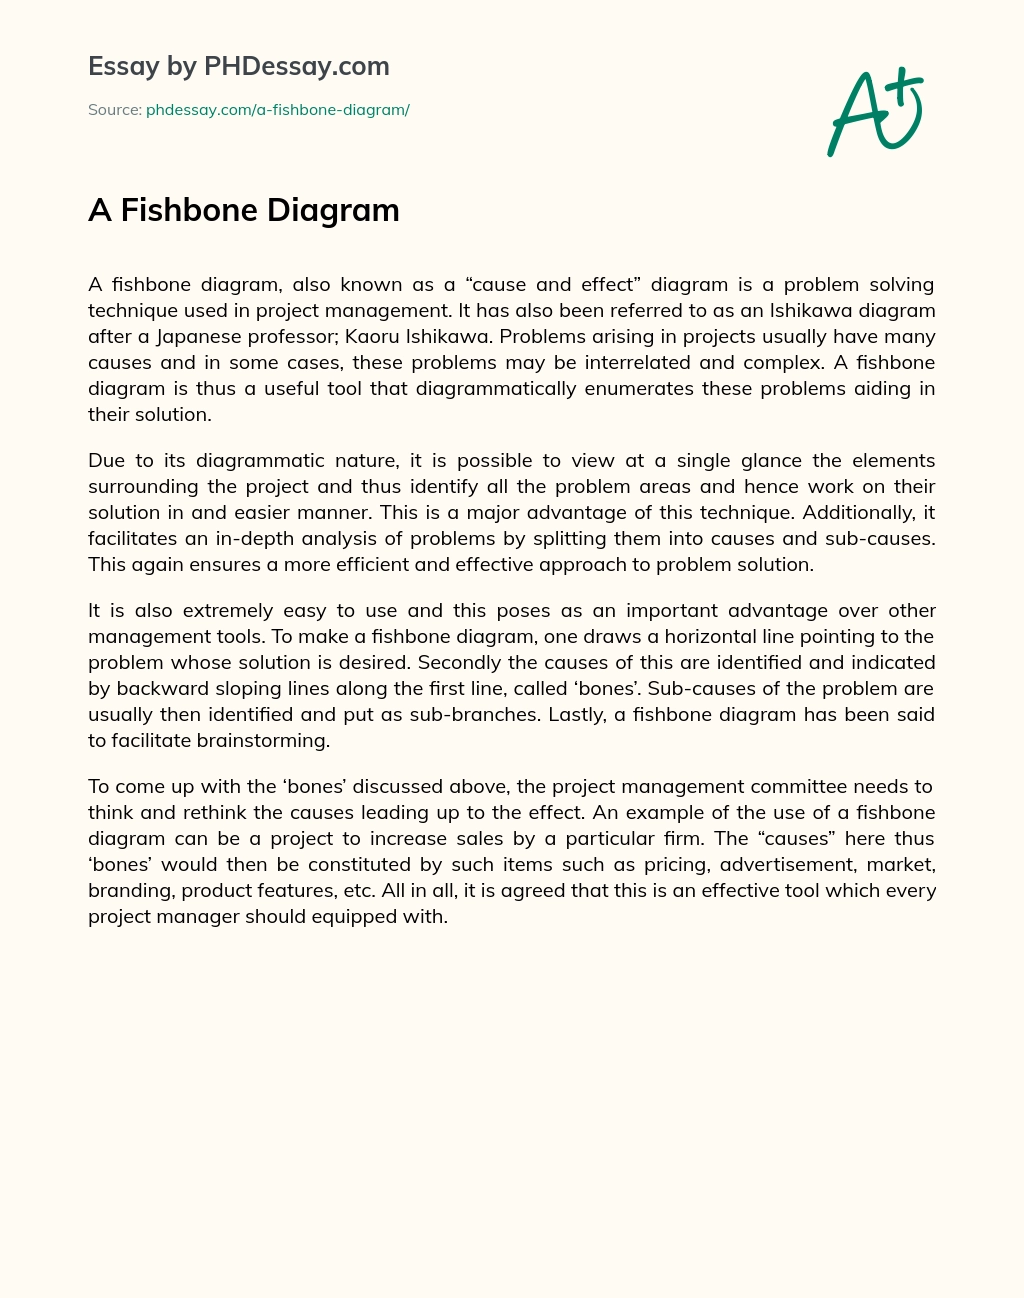 A Fishbone Diagram essay